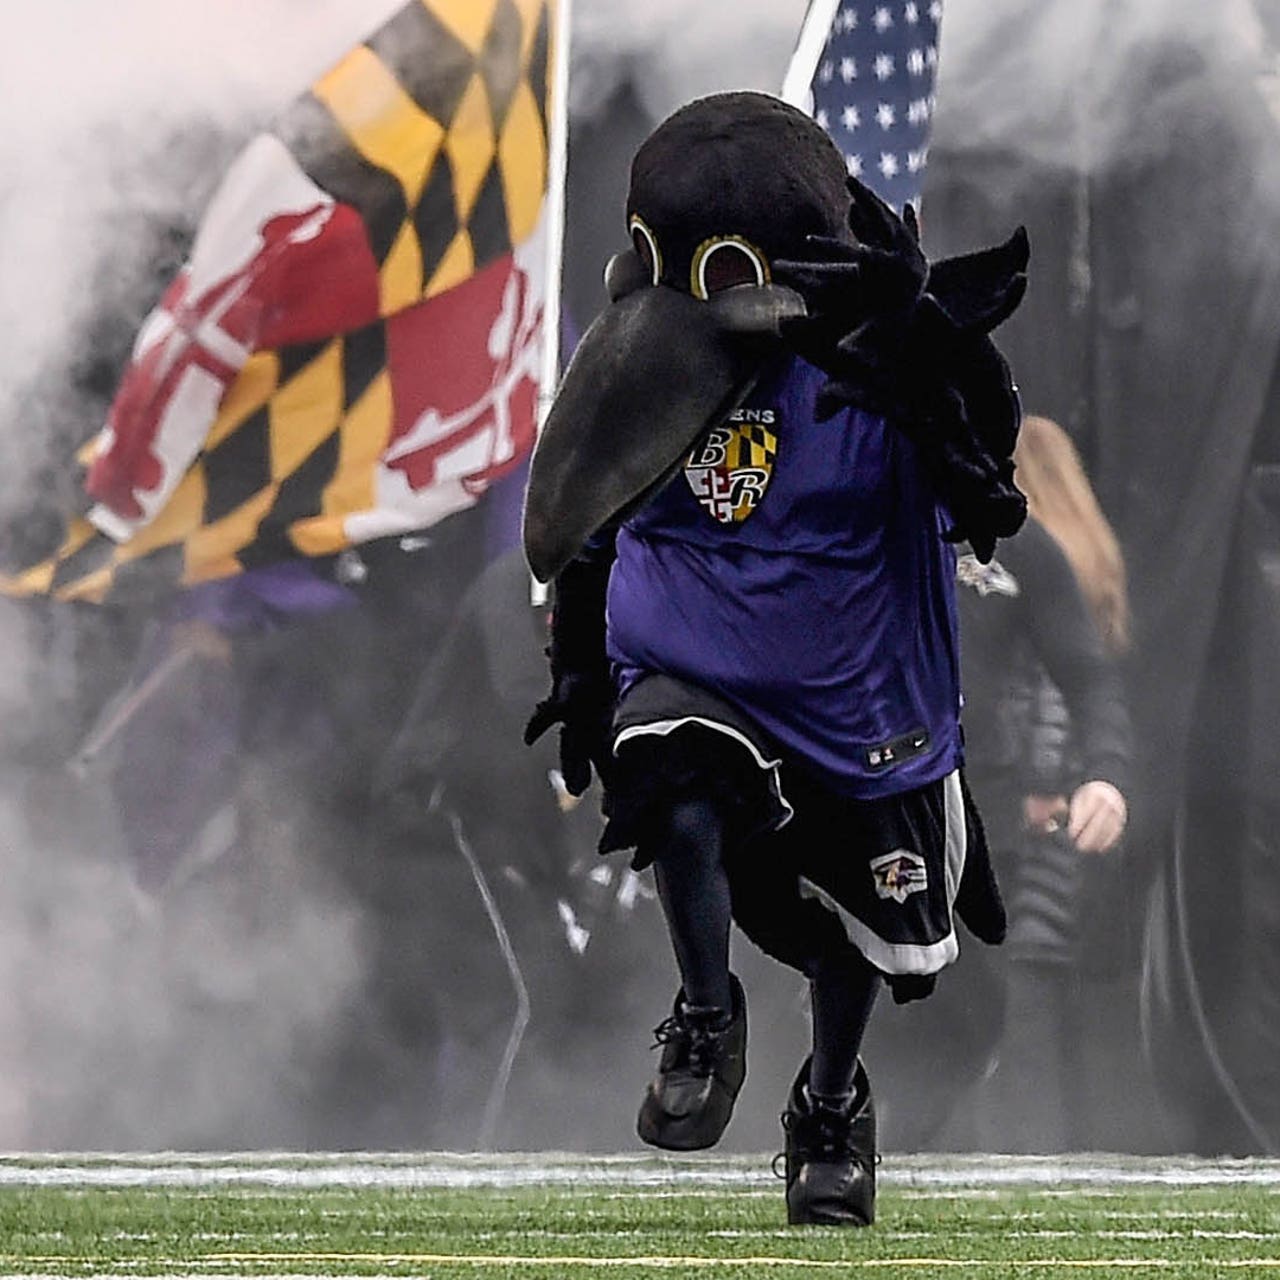 Ravens mascot injured in halftime football game